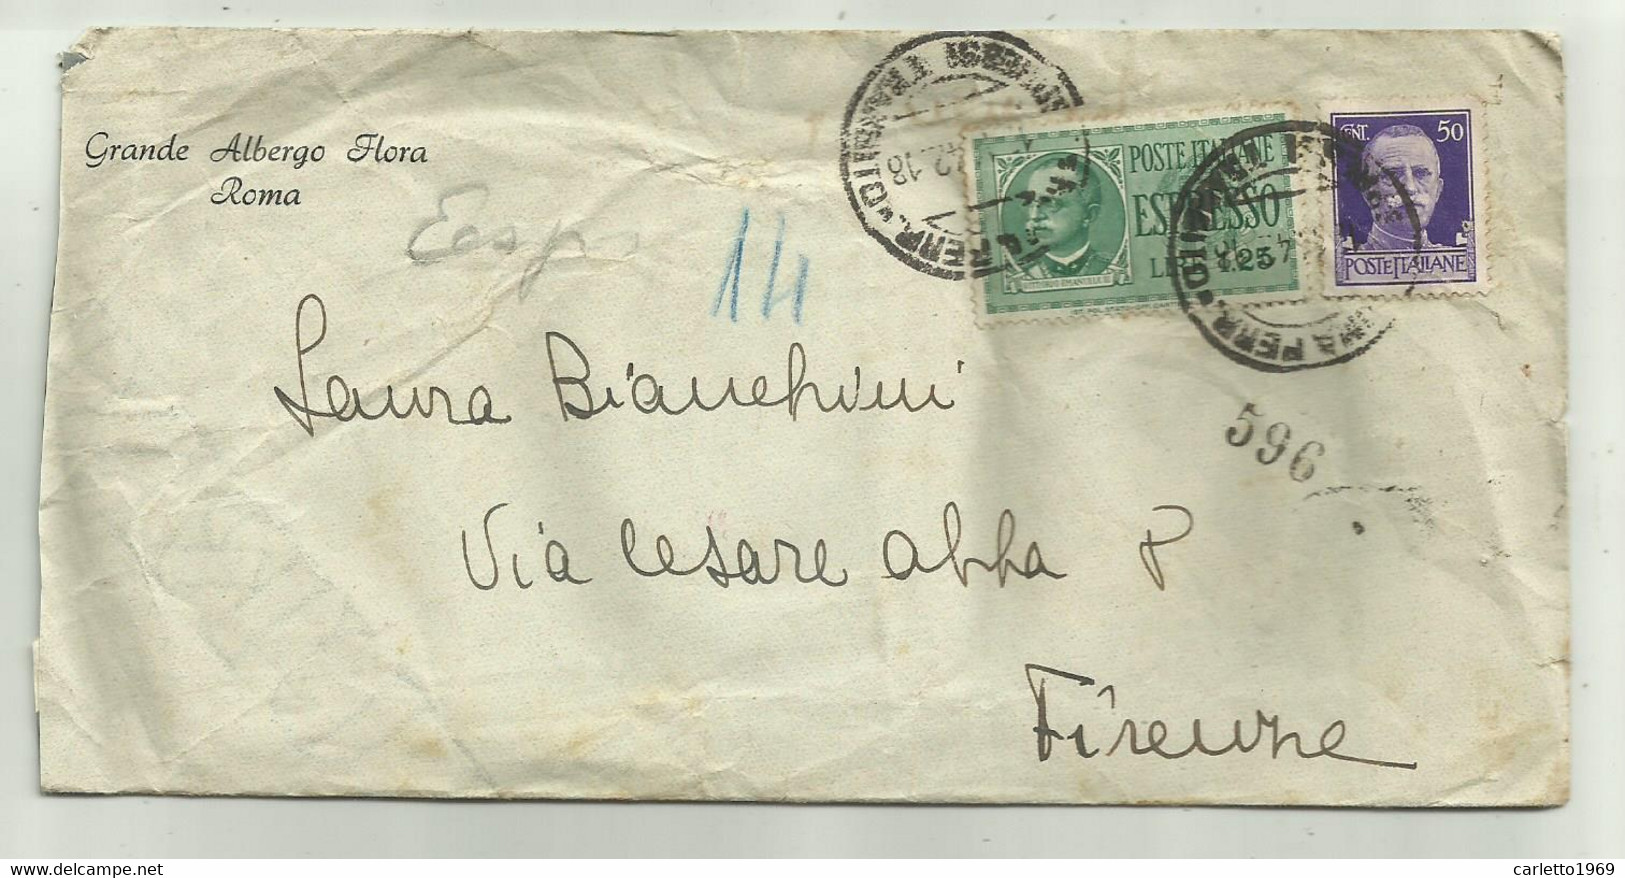 ESPRESSO LIRE 1,25 + CENT. 50 SU BUSTA GRANDE ALBERGO FLORA ROMA 1942 - Gebraucht